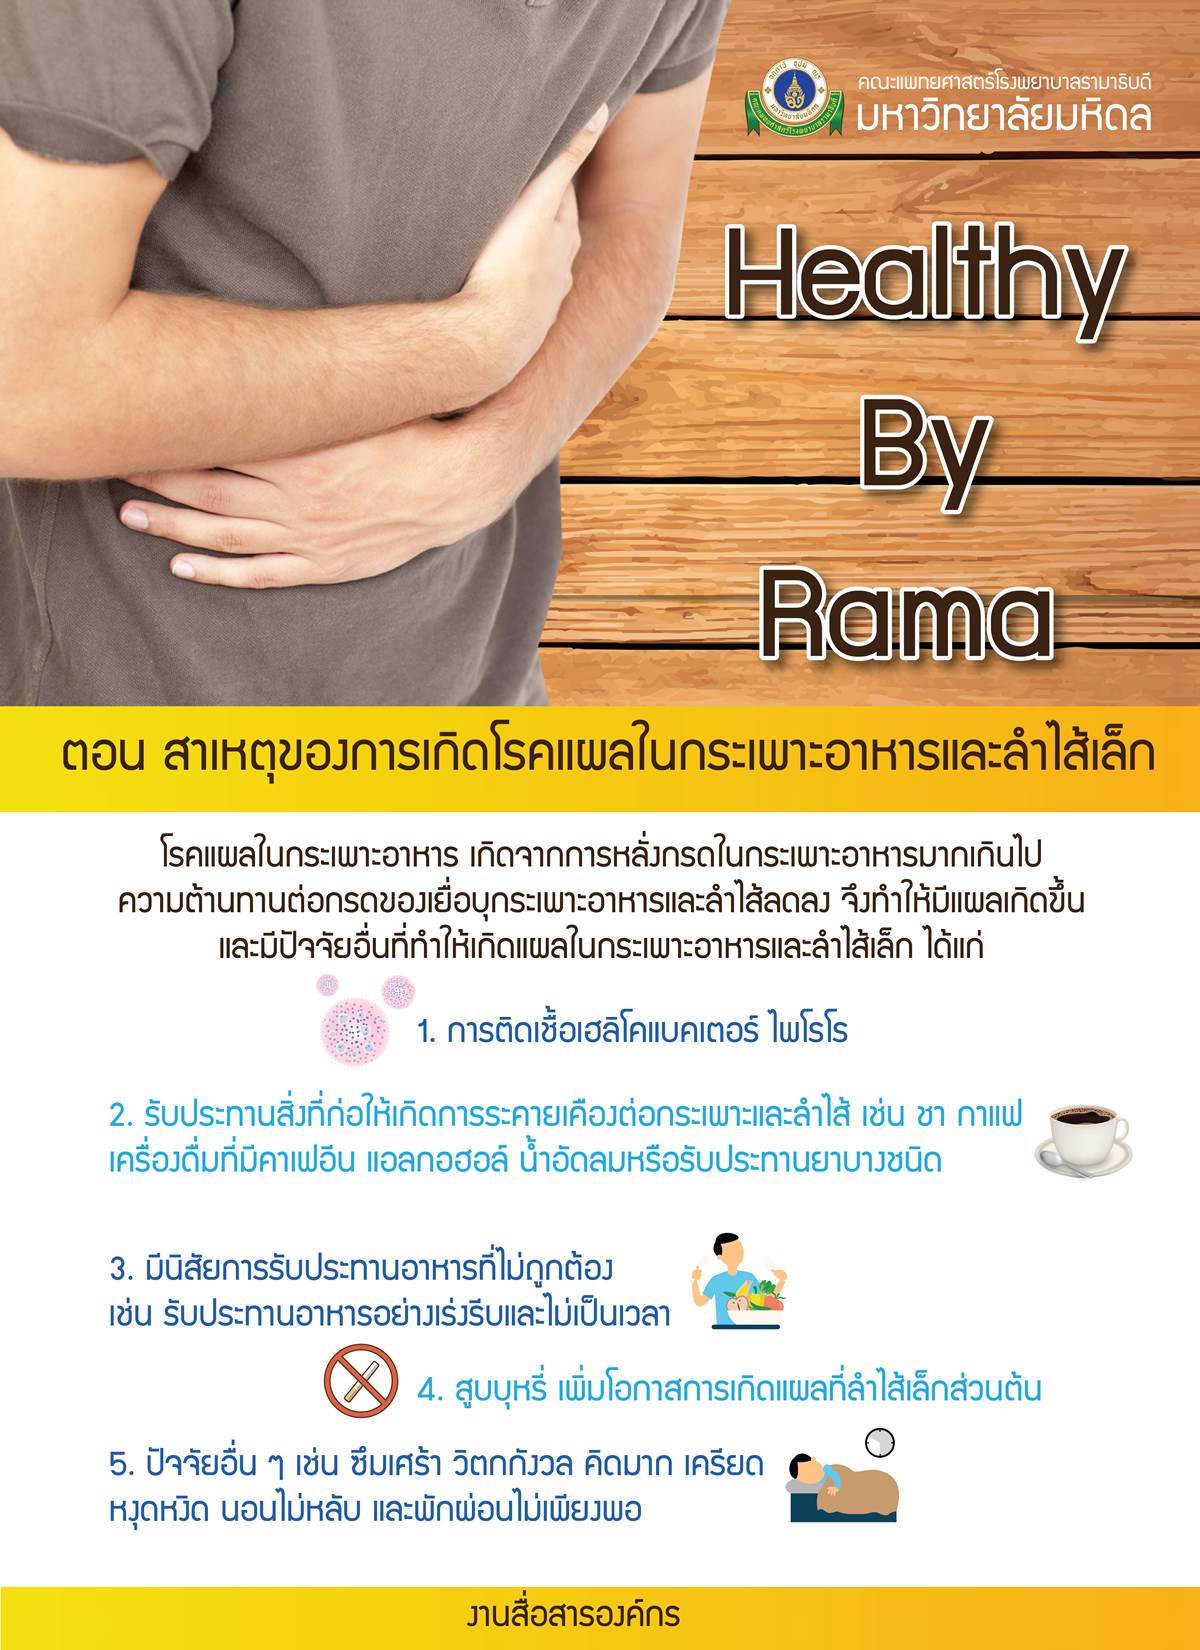 Healthy By Rama ตอน สาเหตุของการเกิดโรคแผลในกระเพาะอาหารและลำไส้เล็ก